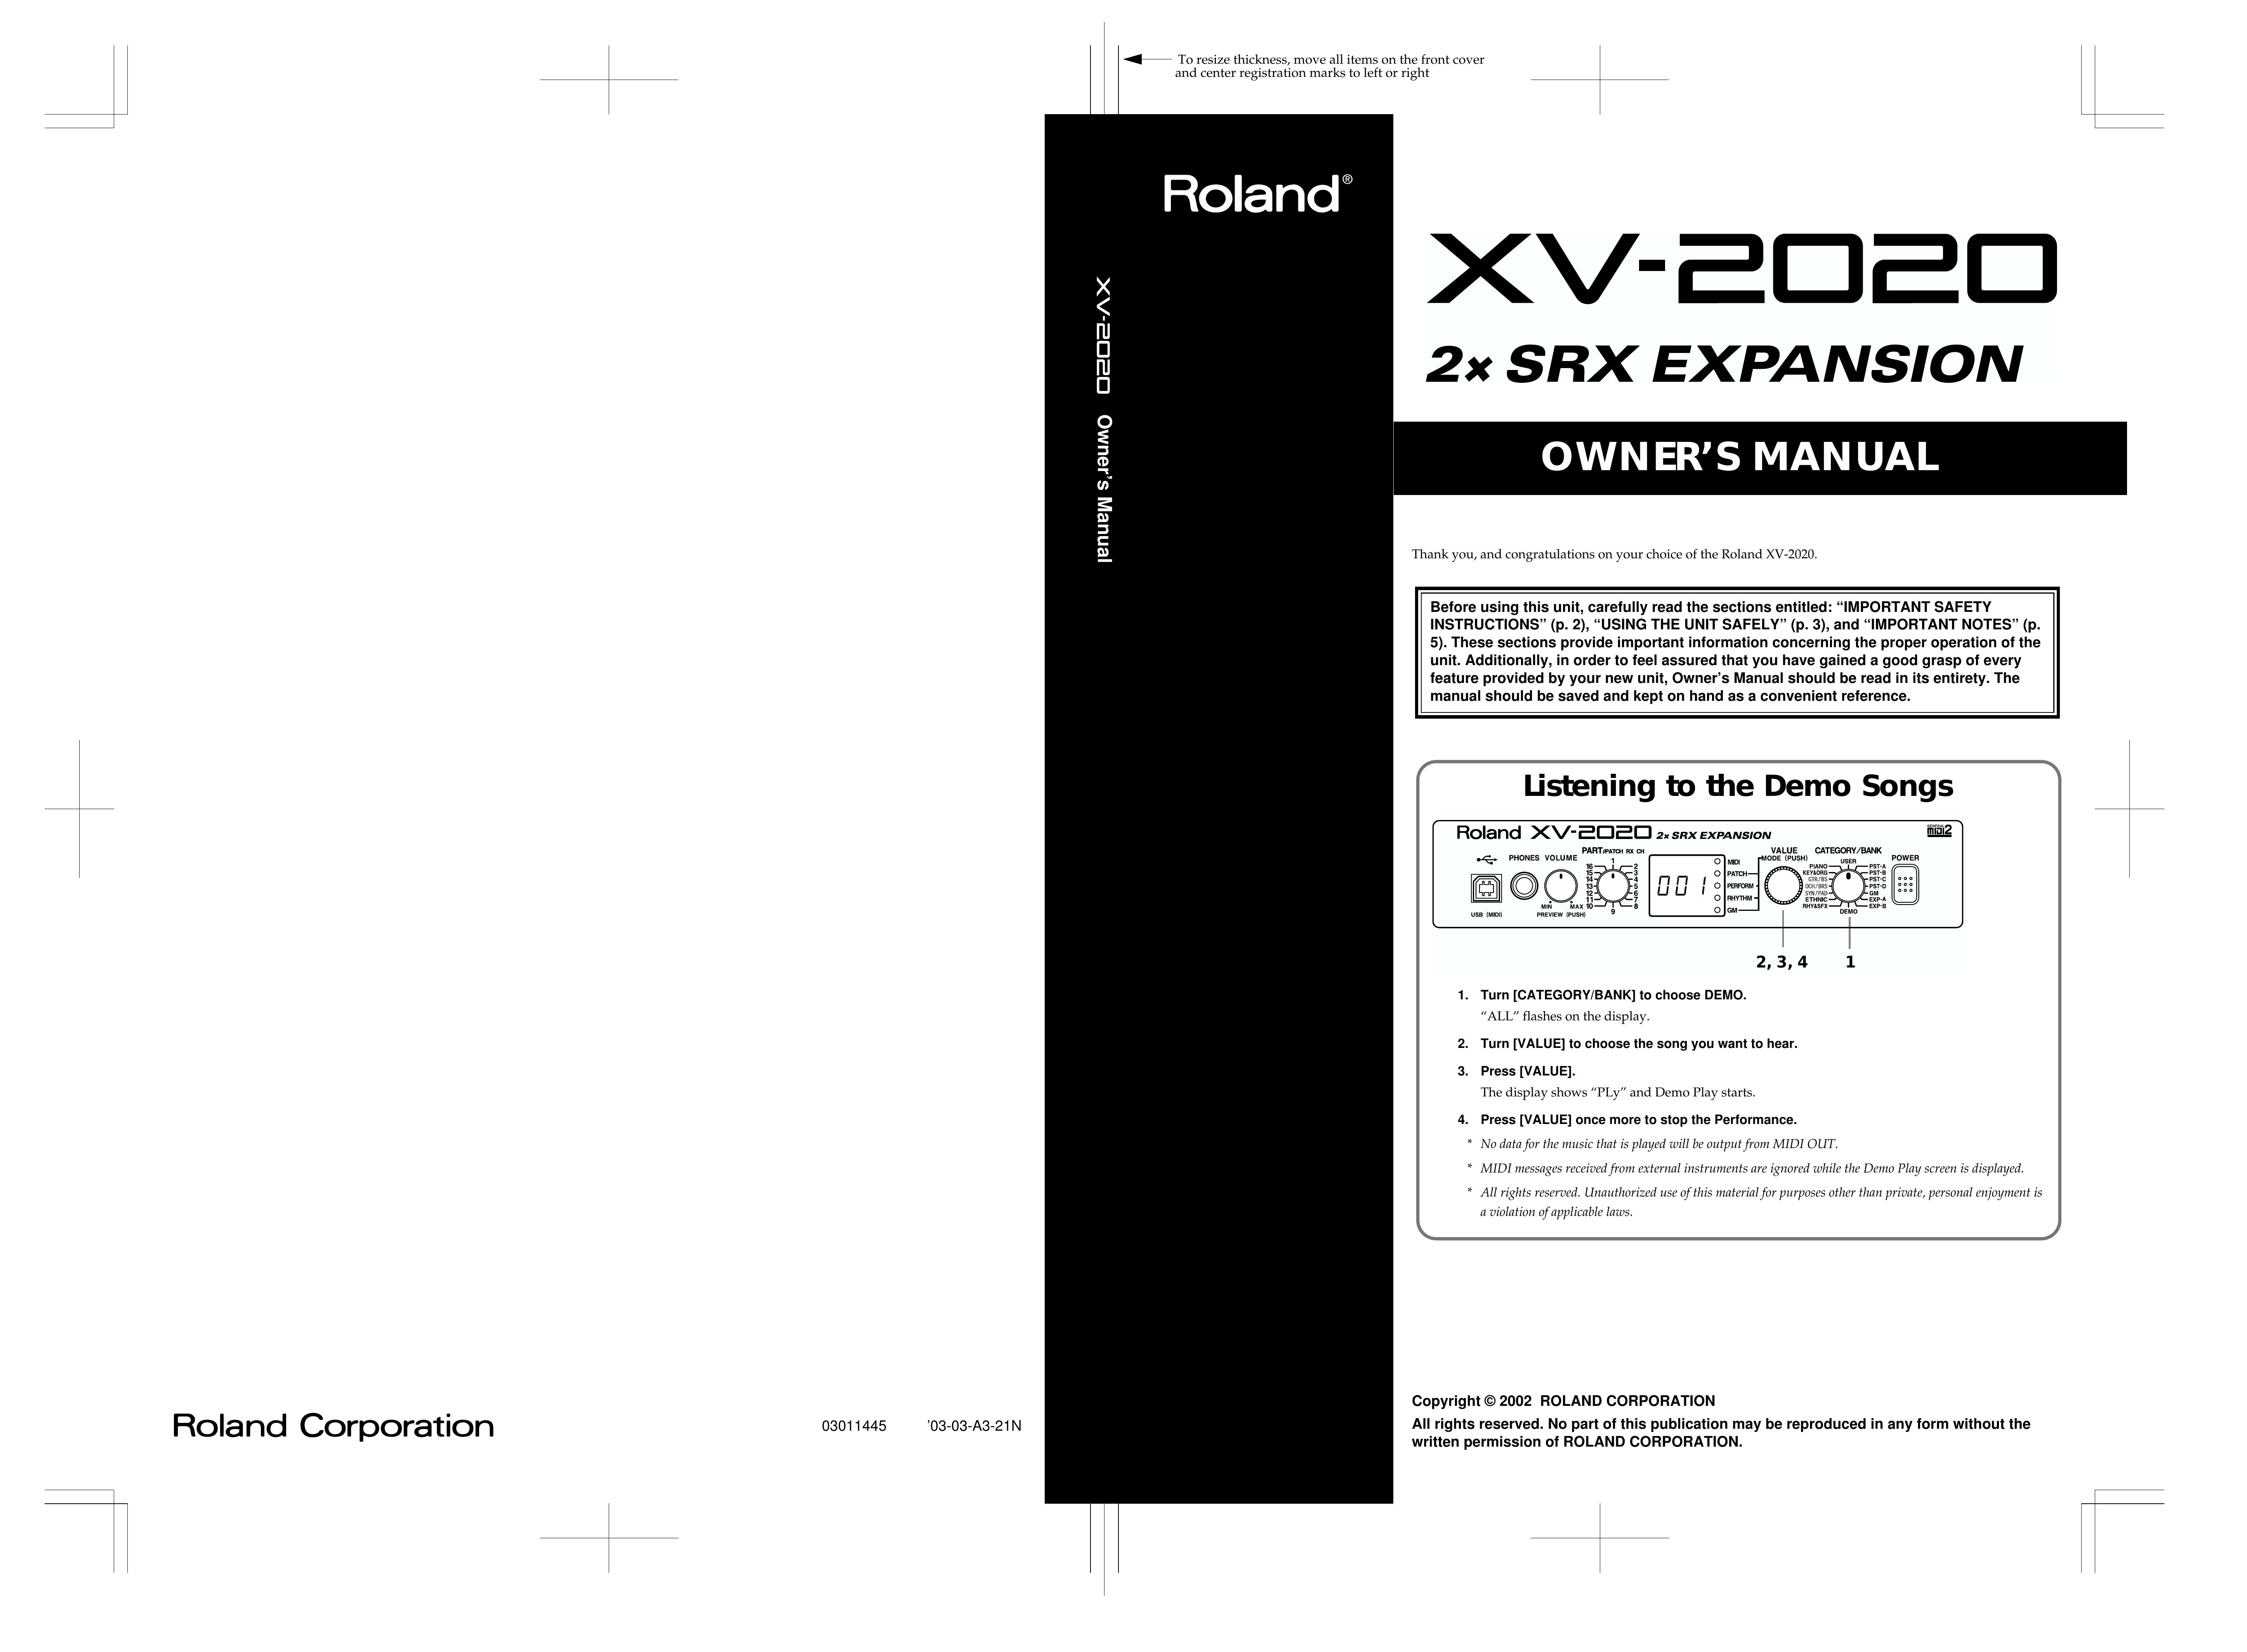 Kenwood XV-2020 Recording Equipment User Manual